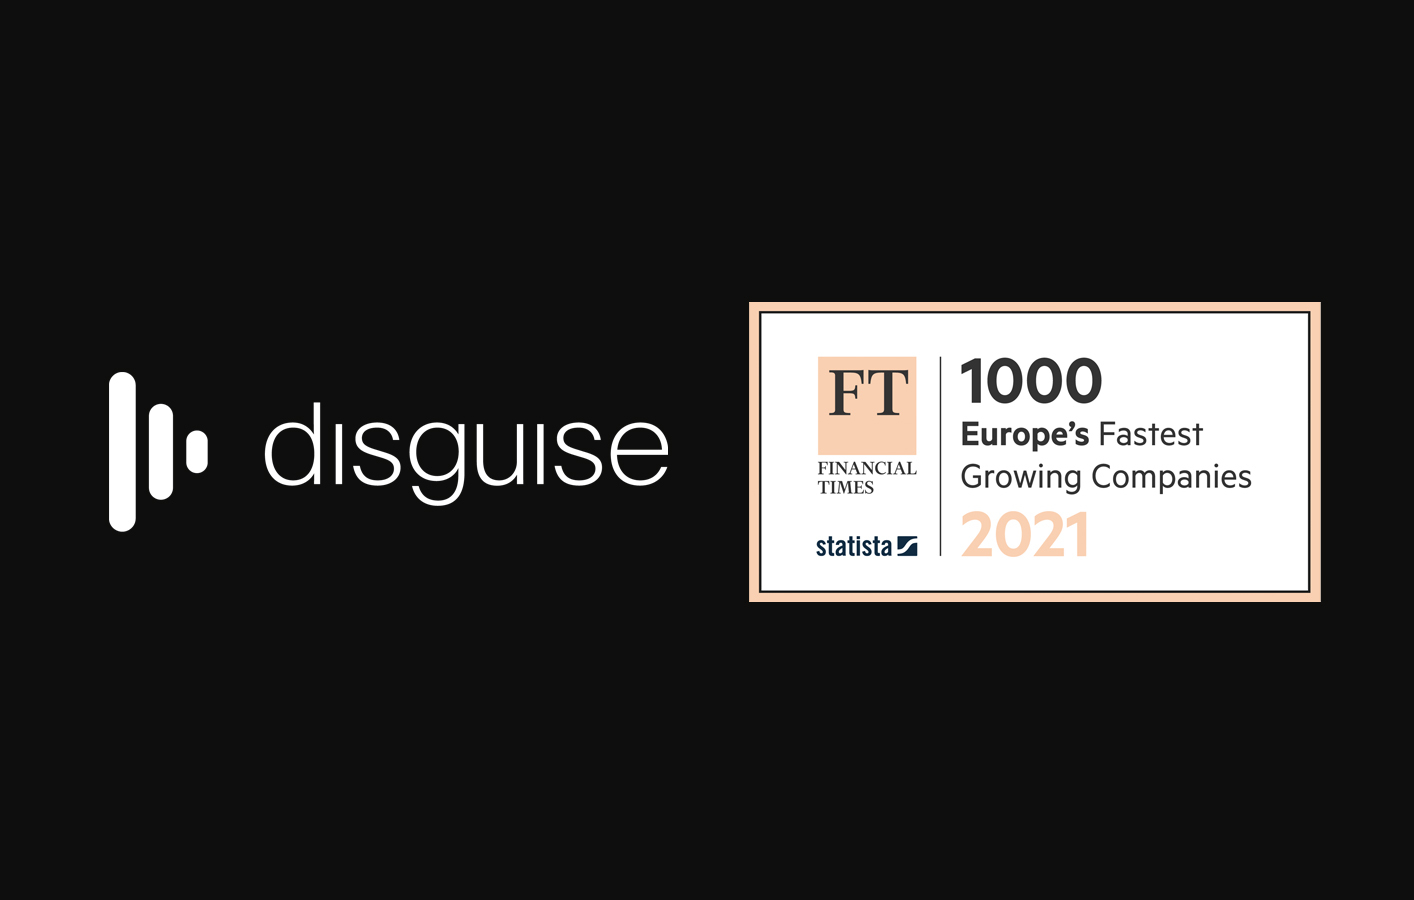 disguise Financial Times’ 1000 Fastest Growing European Companies 2021